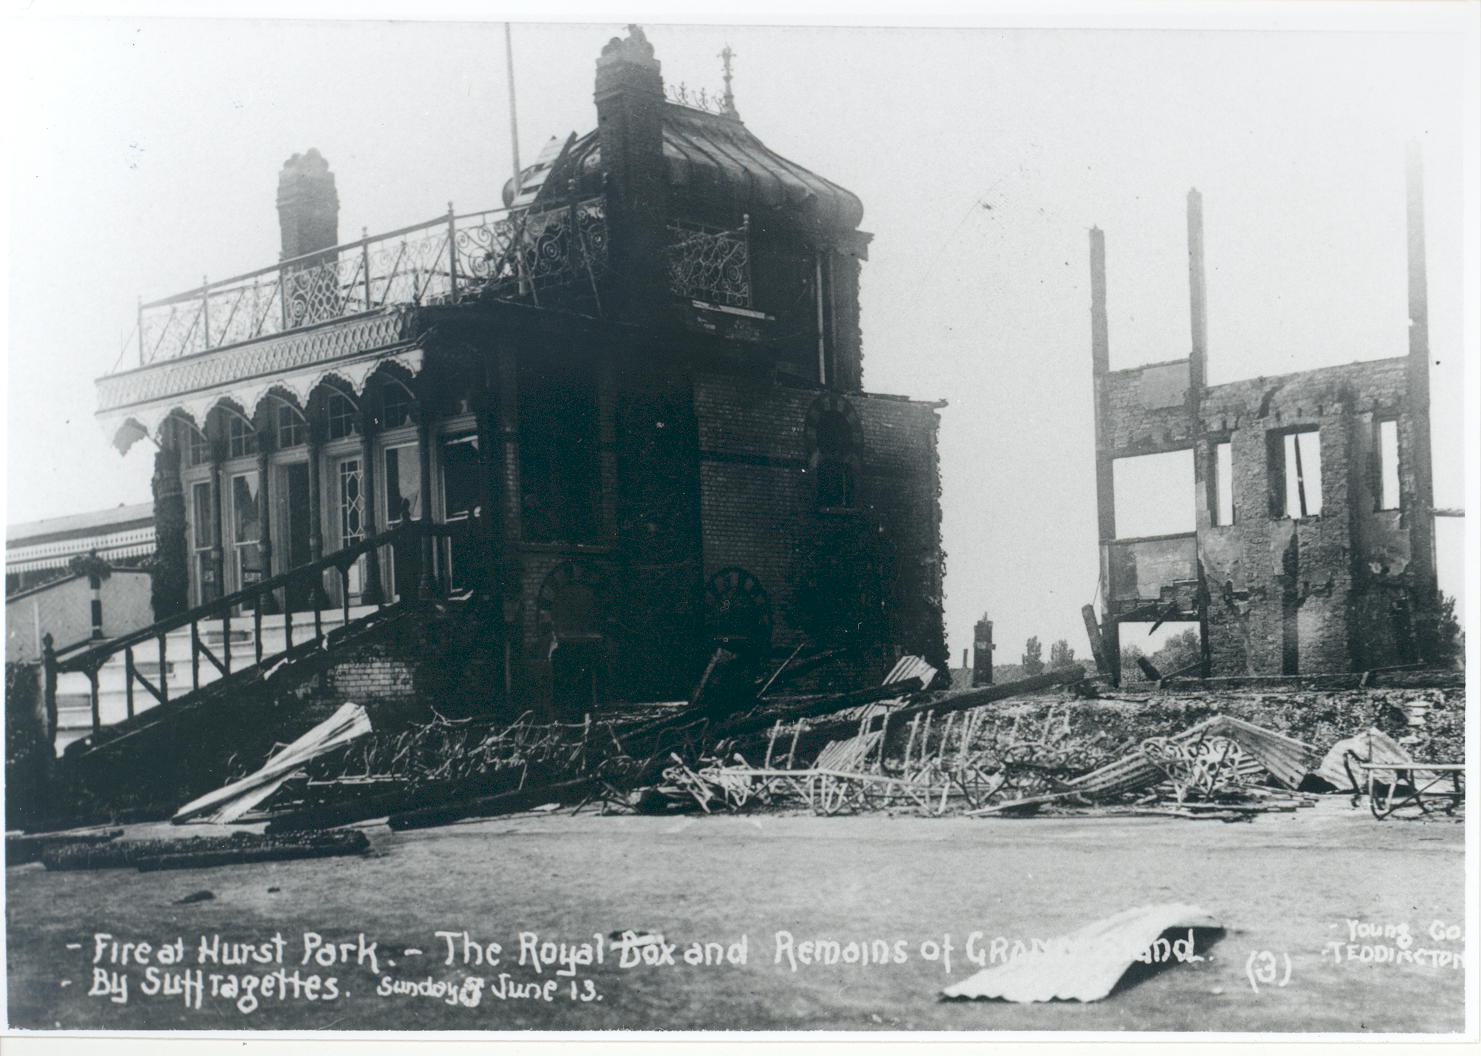 the remains of Hurst Park Grandstand after Suffragette arson, June 1913.